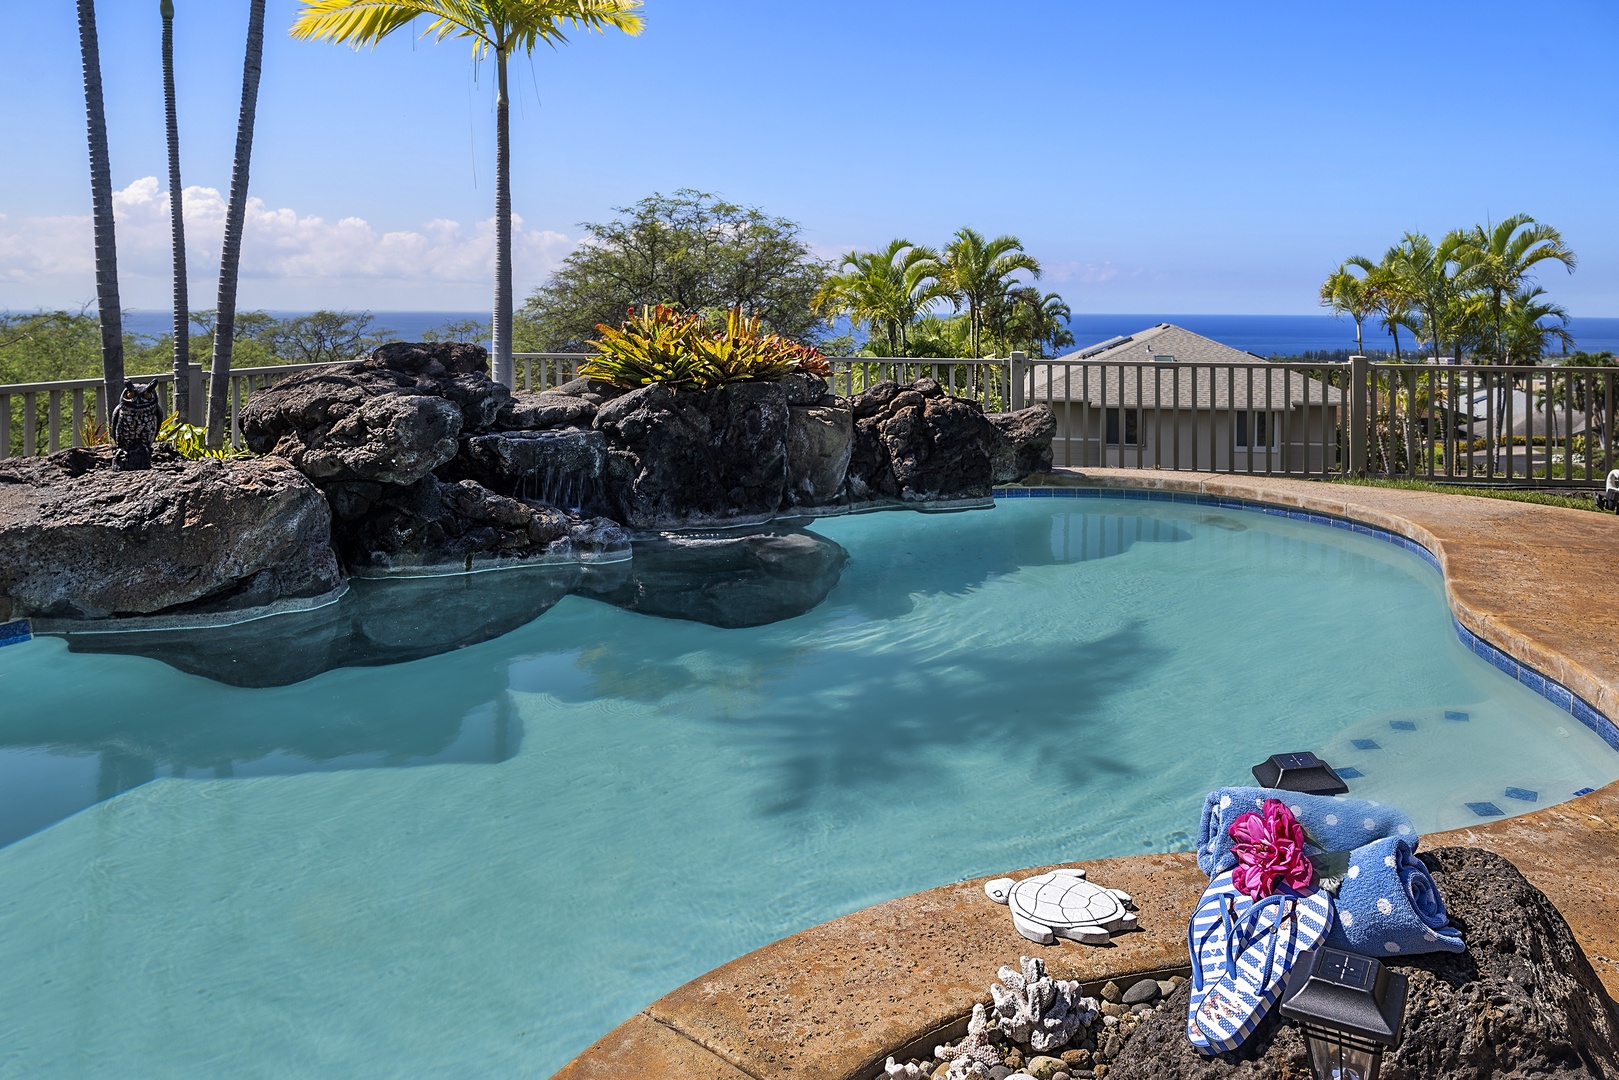 Kailua Kona Vacation Rentals, Malulani Retreat - Private saltwater pool with lava rock waterfall